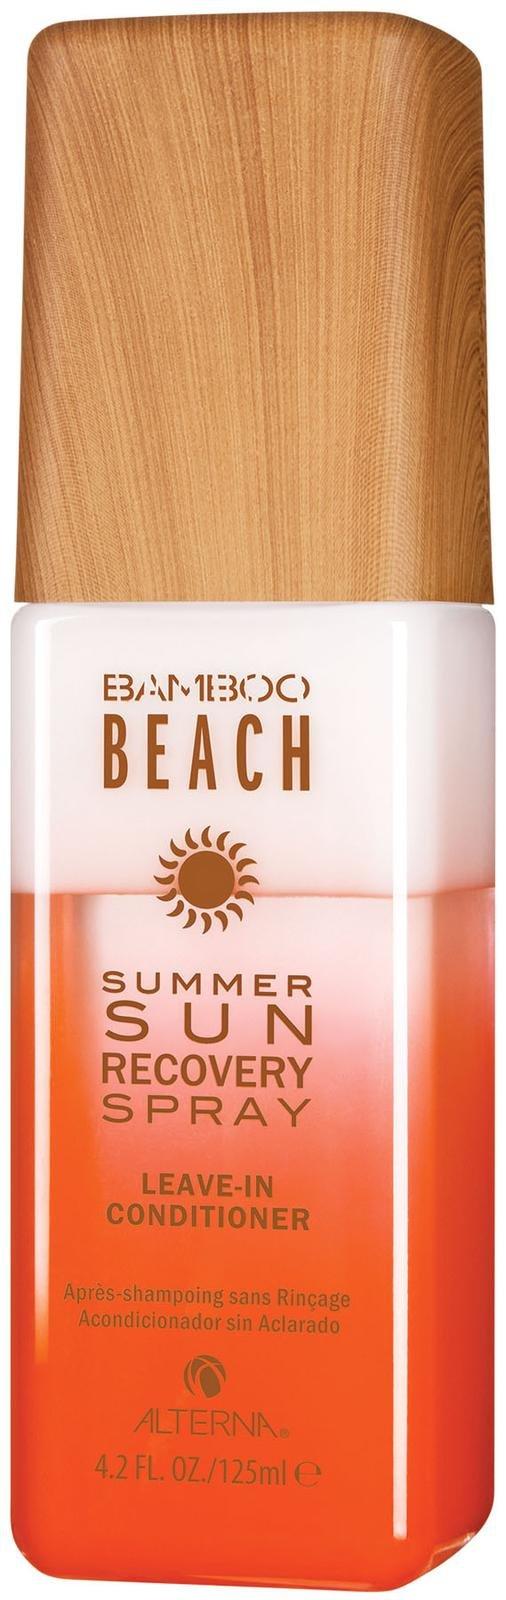 Alterna Bamboo Beach Summer Sun Recovery Spray - 4.2 Oz